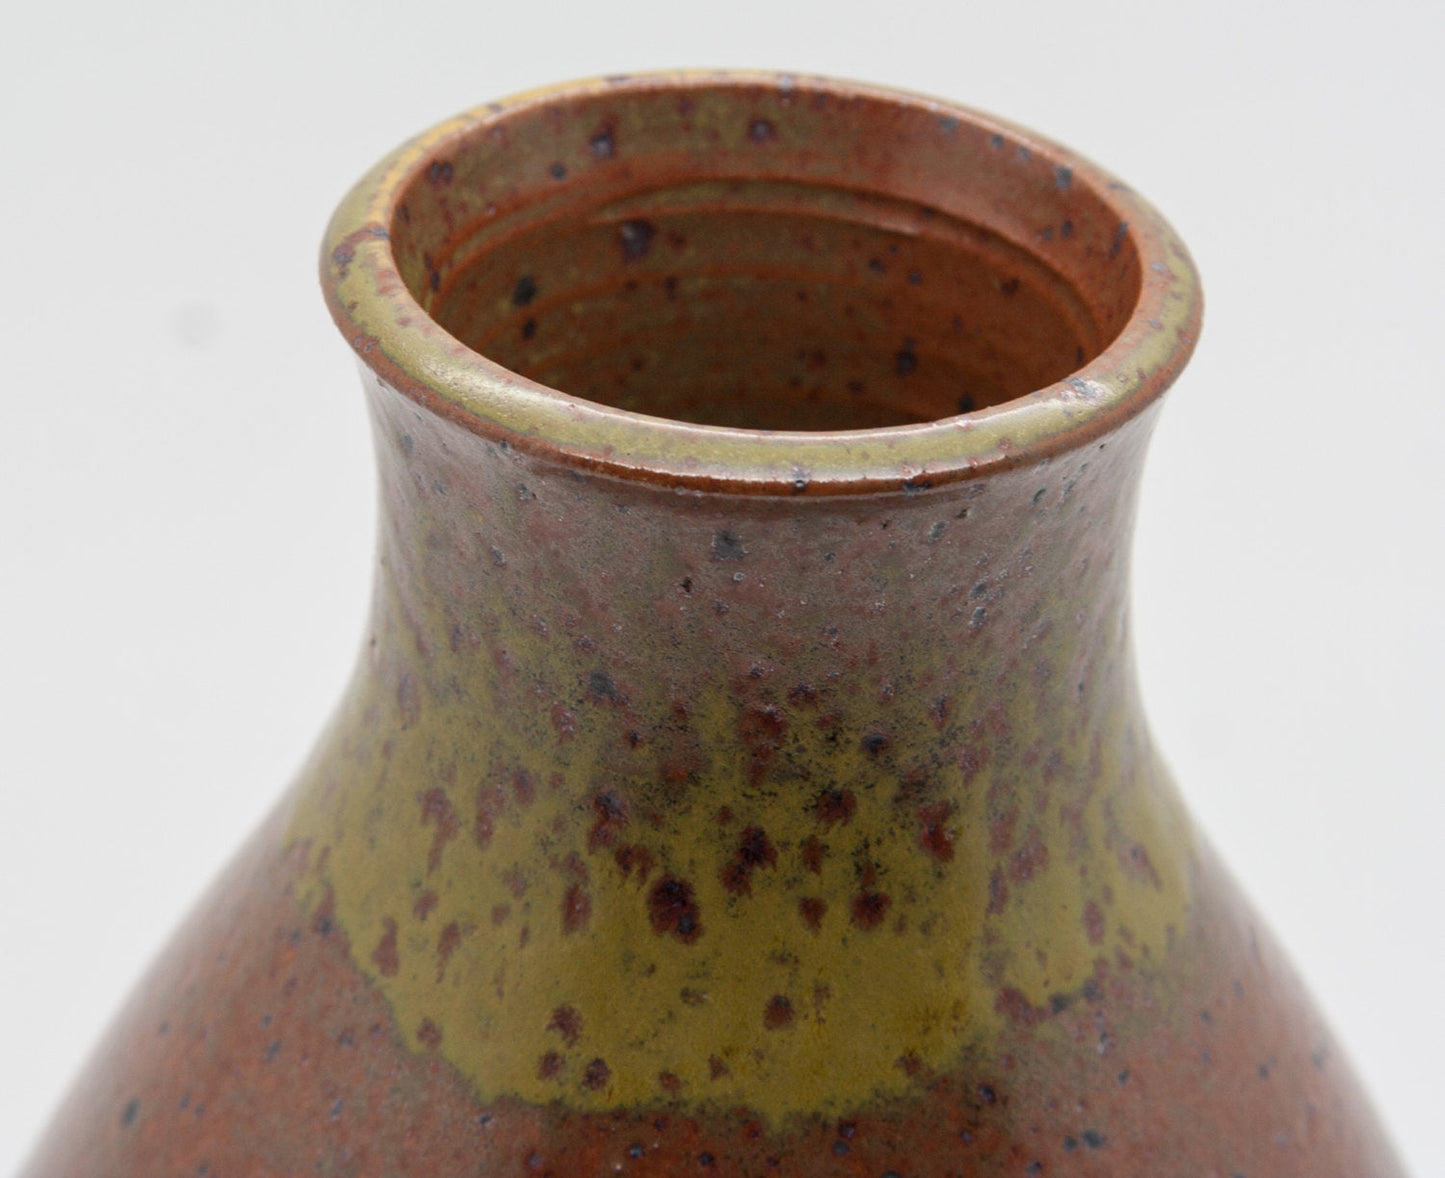 MARIANNE STARCK / MICHAEL ANDERSEN Brown Yellow Glazed Stoneware Vase Mollaris.com 